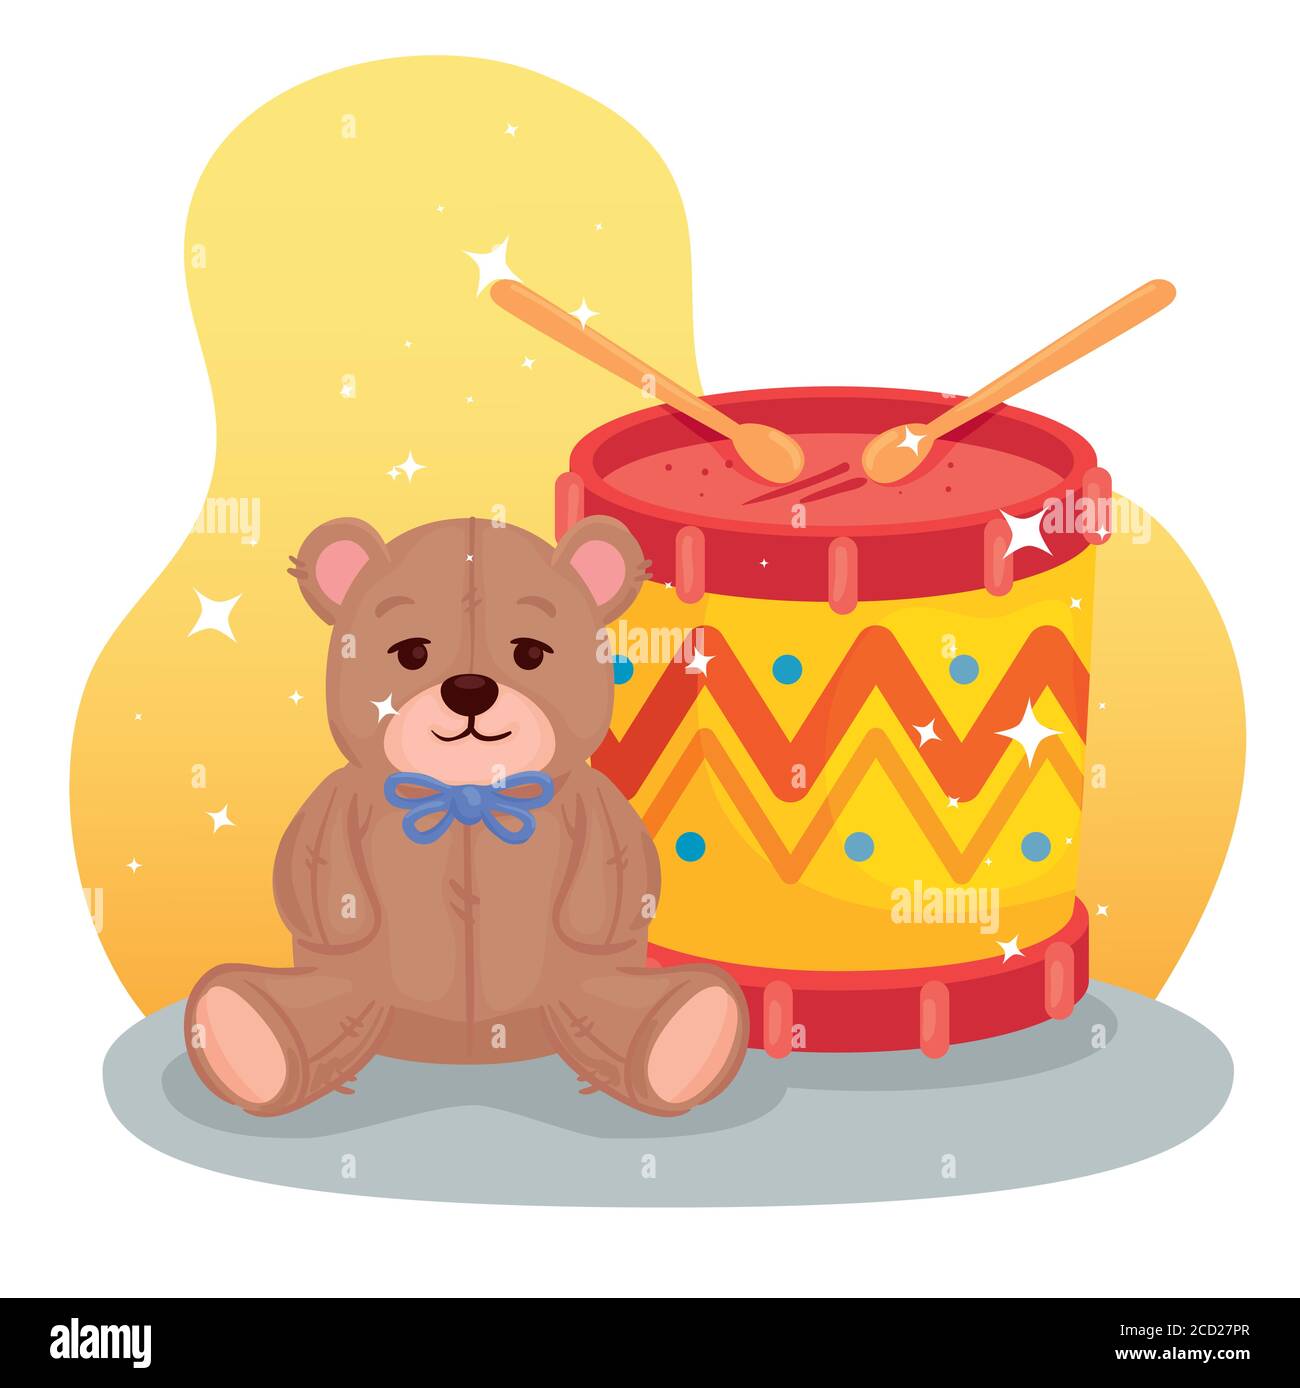 Cartoon Animal Bear Wooden Handbell Drum with Drumsticks Early